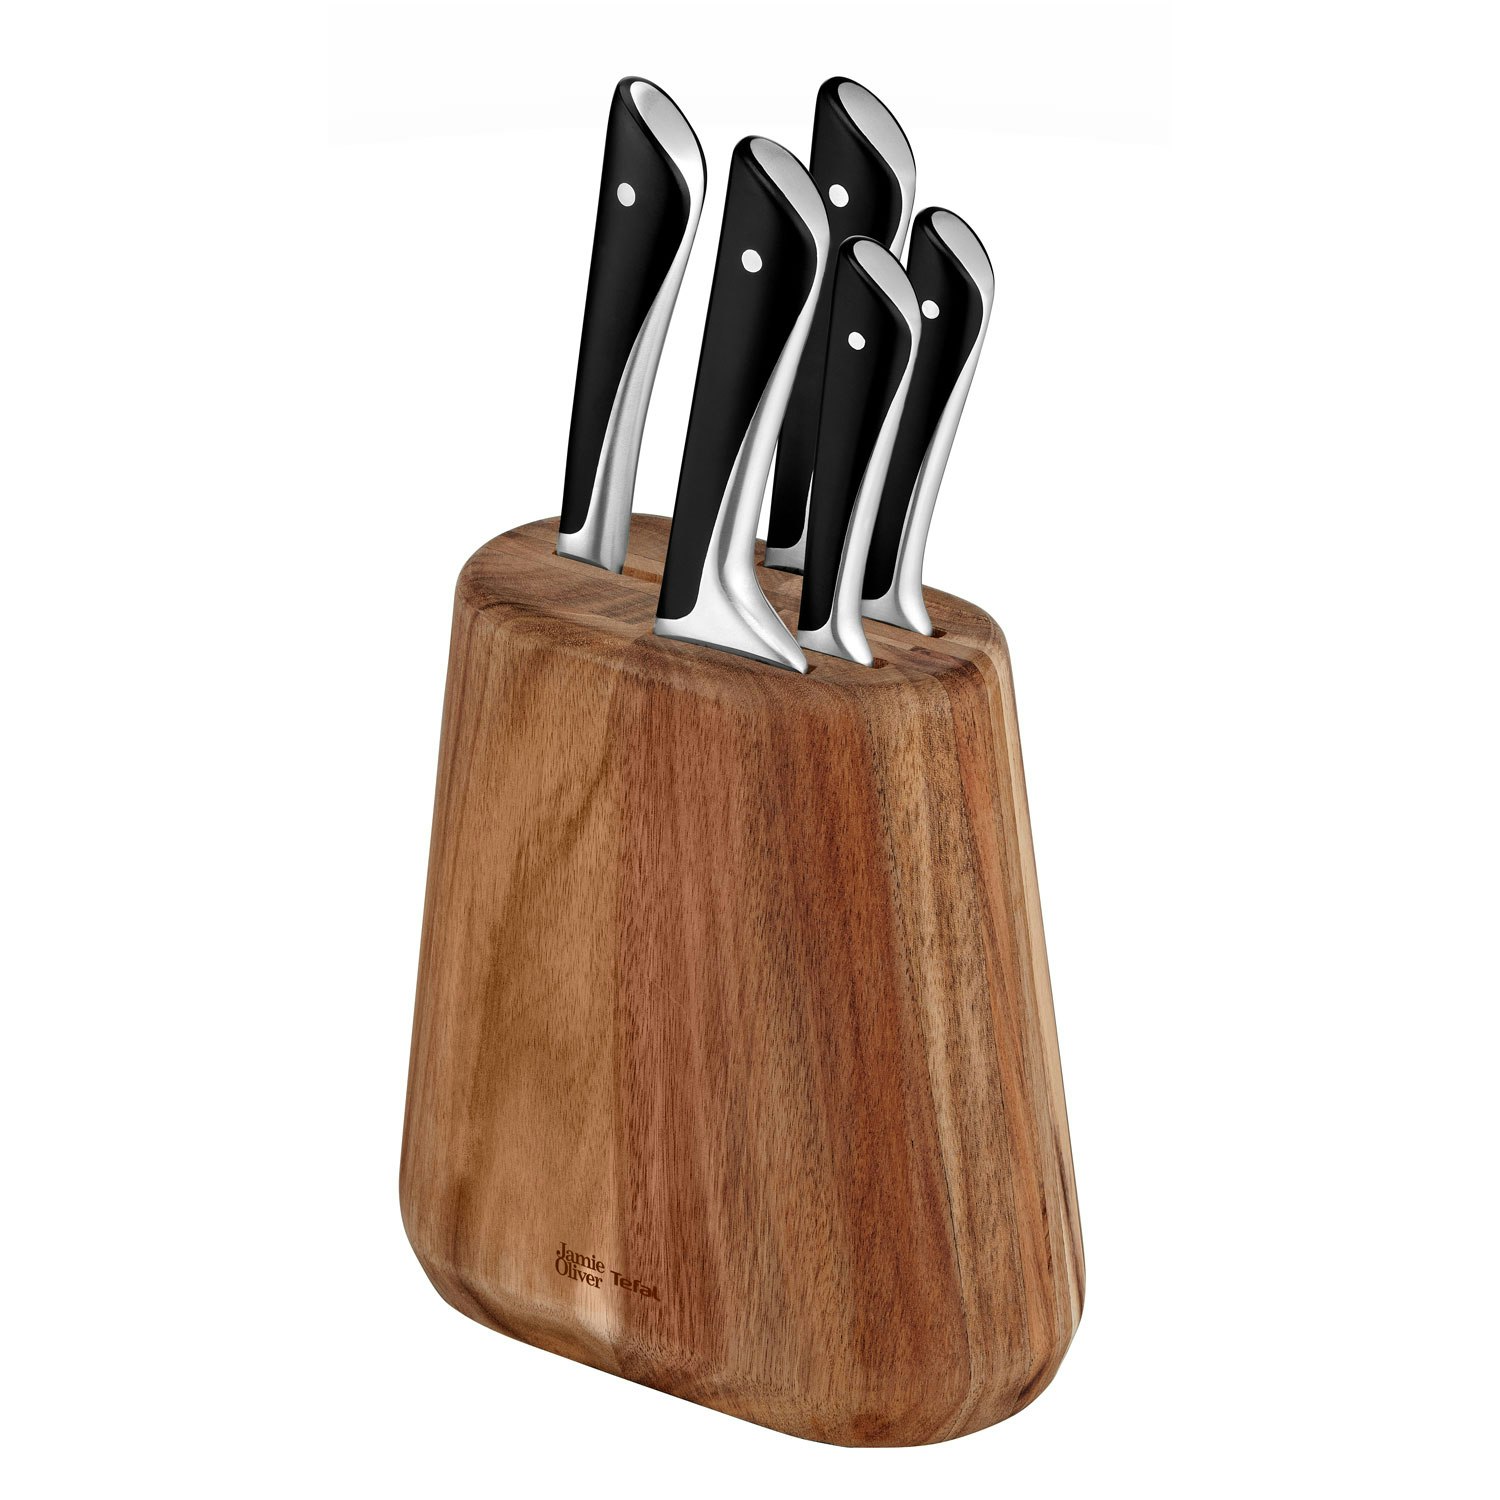 Essential Potato Peeler With Movable Blade - Fiskars @ RoyalDesign